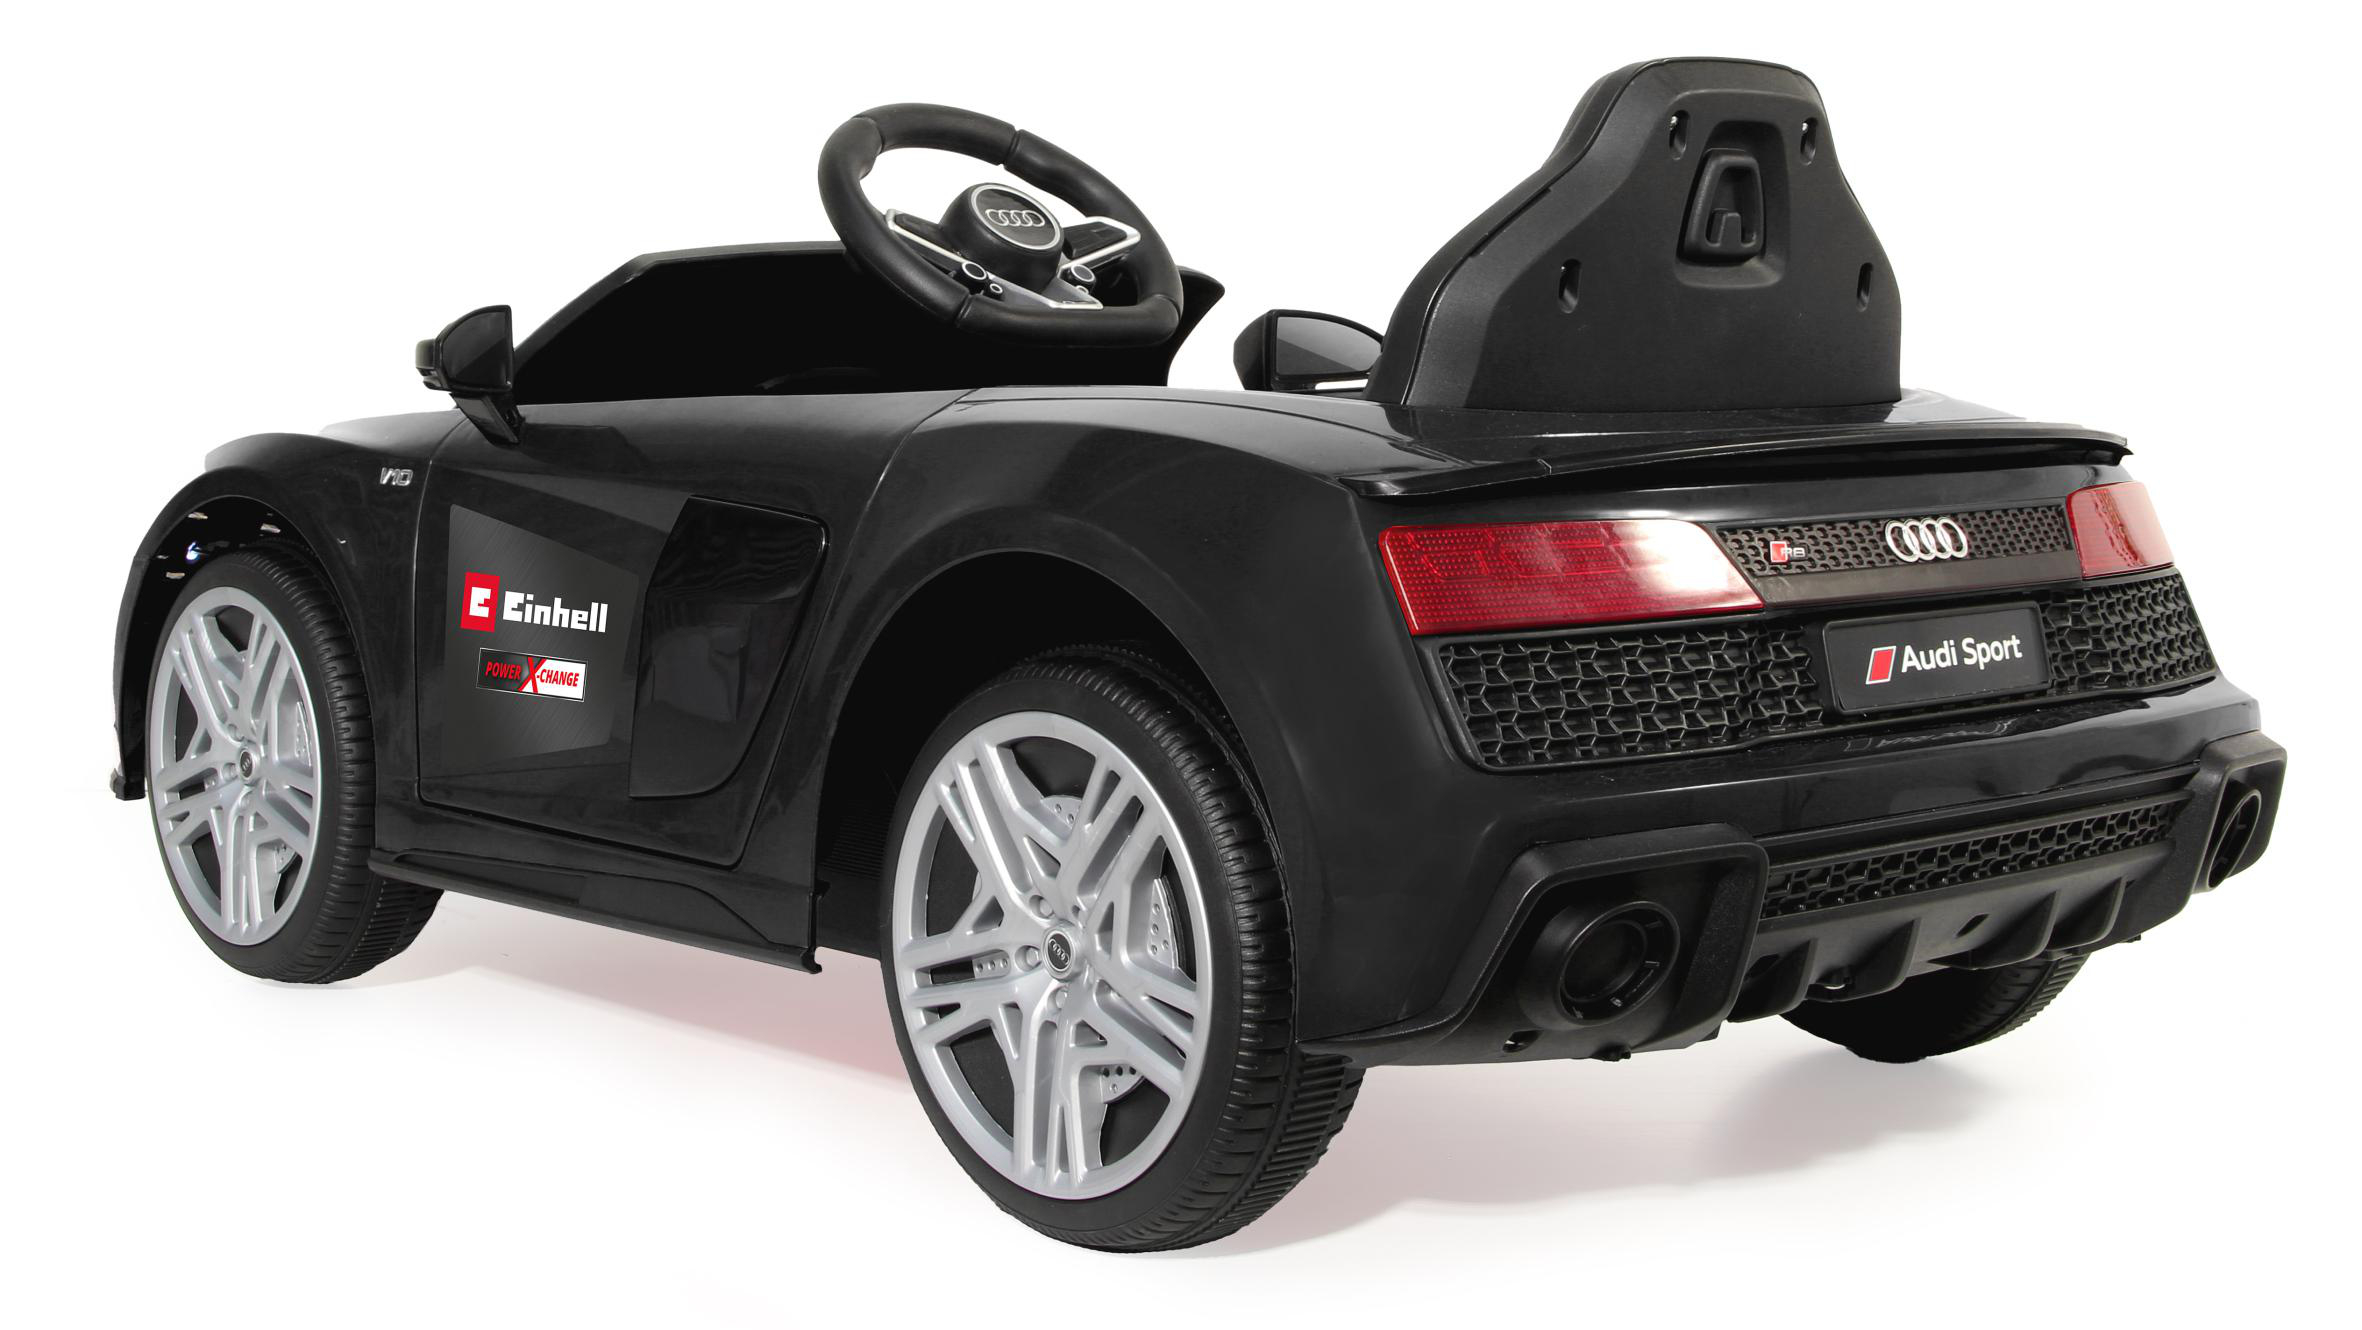 Spyder R8 Set schwarz Ride-on JAMARA Starter KIDS inkl. 18V Elektrofahrzeug Einhell Power Audi X-Change Schwarz